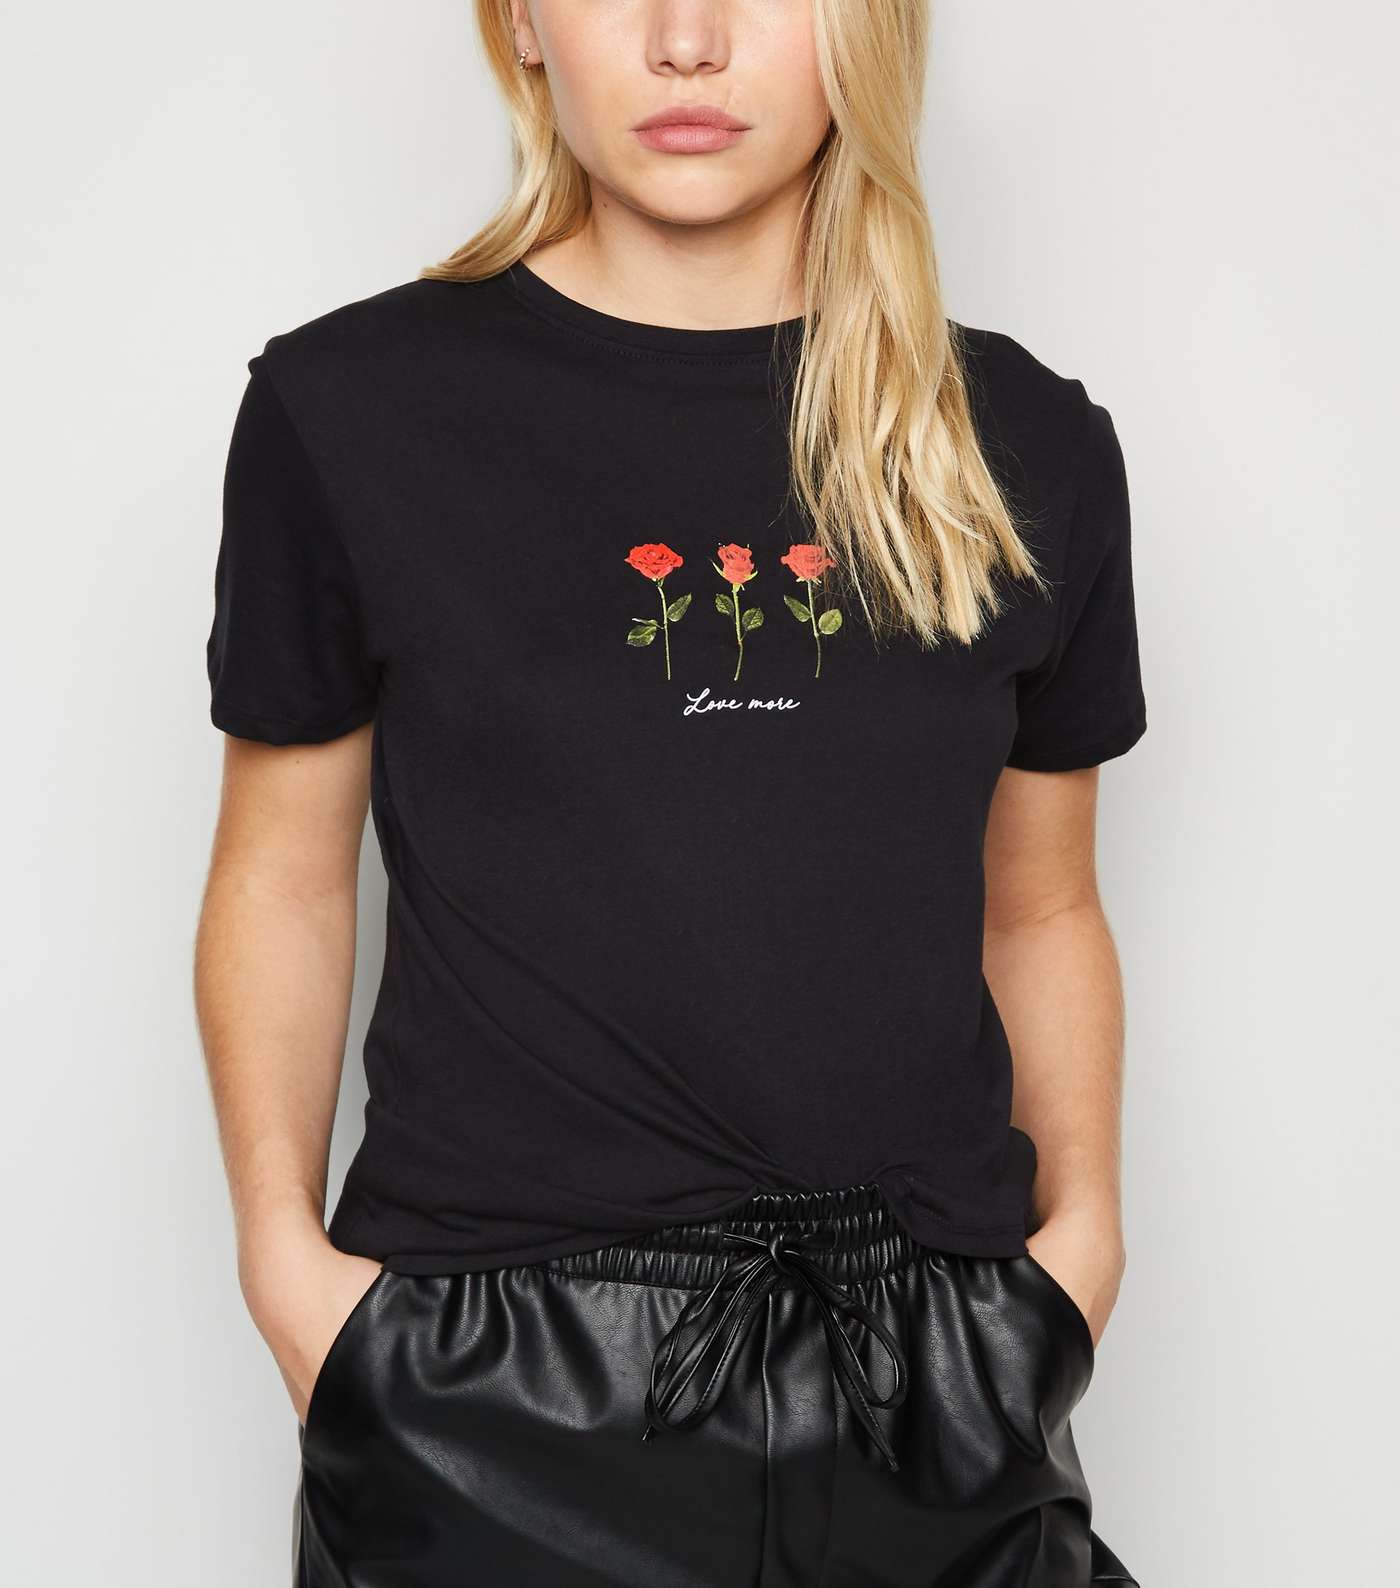 Petite Black Rose Love More Slogan T-Shirt